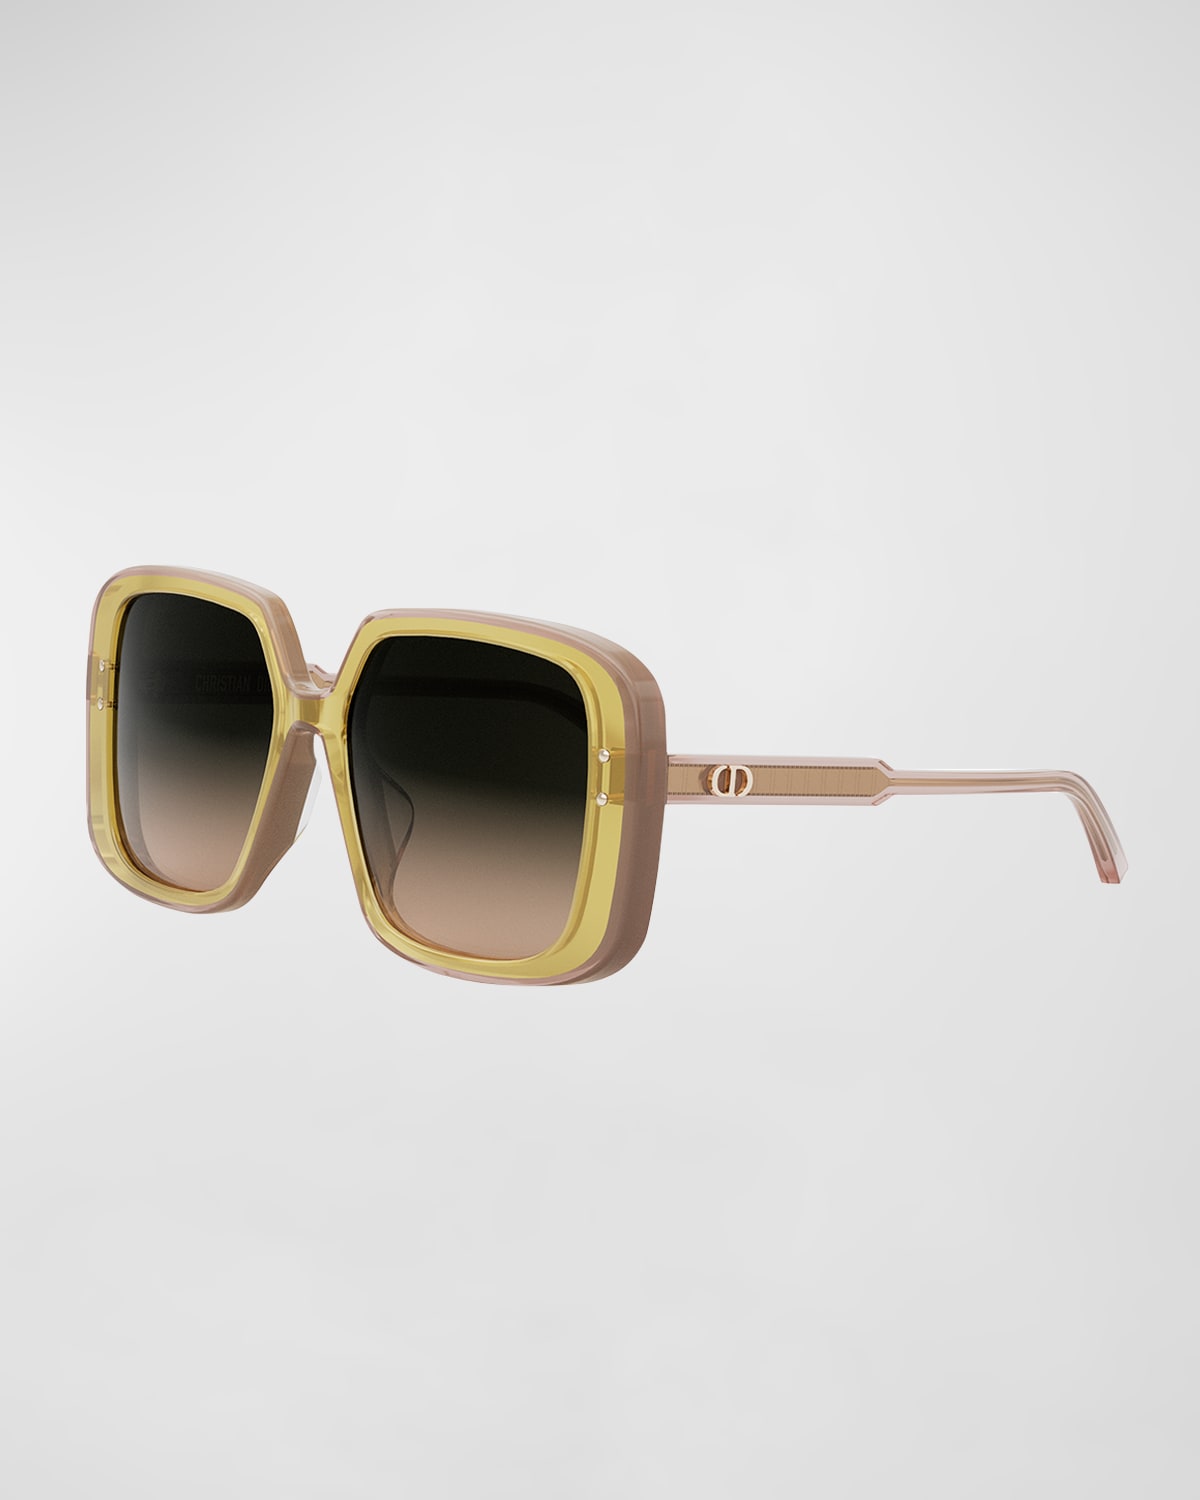 Dior Highlight S3f Sunglasses In Shiny Yellow Grad